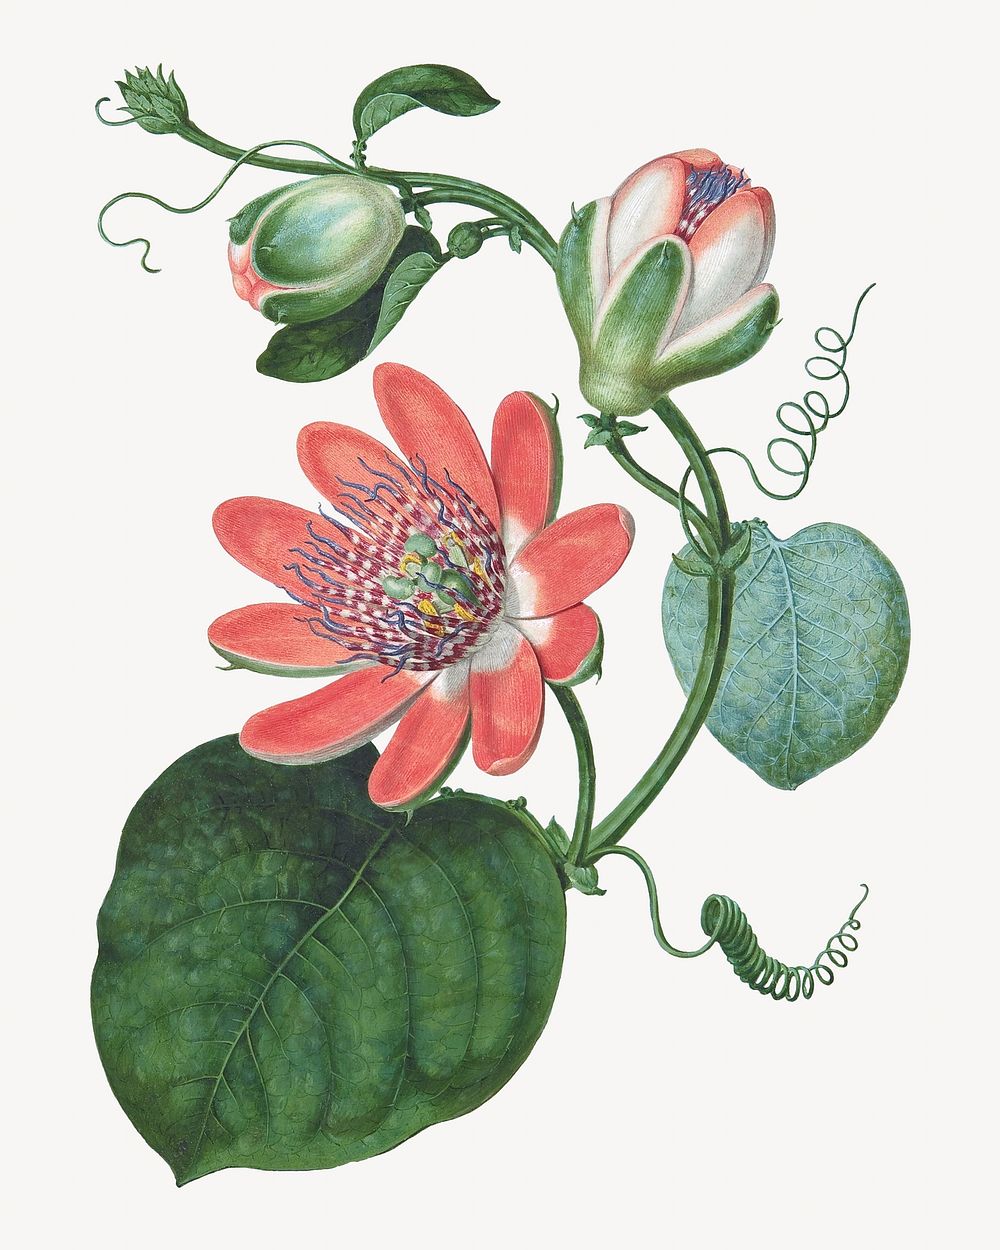 Passion flower, vintage botanical illustration by Sydenham Teak Edwards. Remixed by rawpixel.